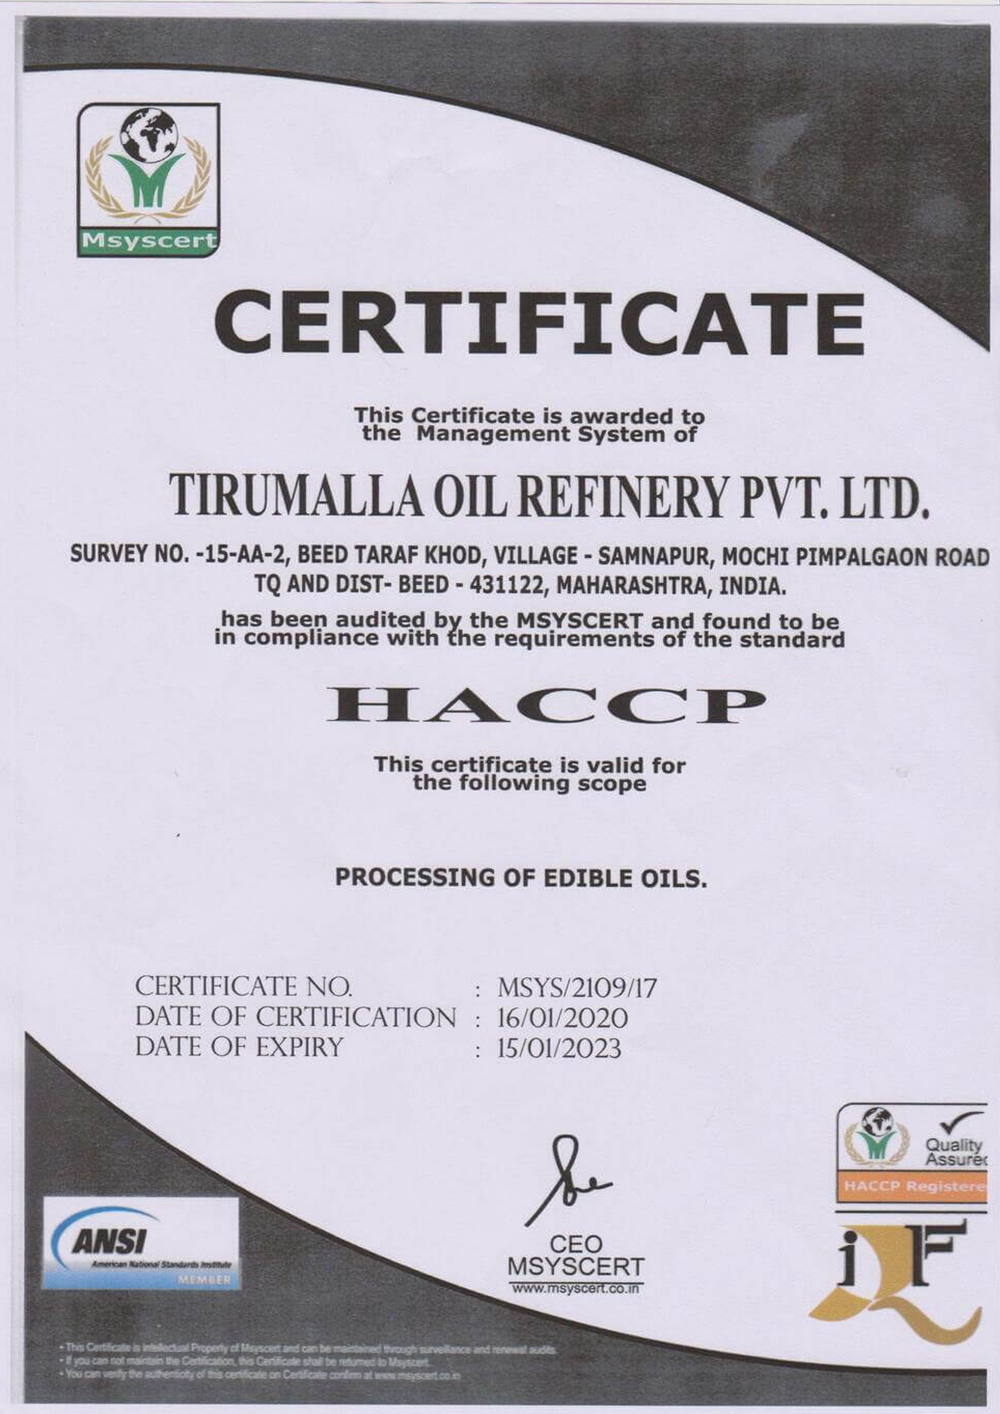 iso certificate of tirumalla oil